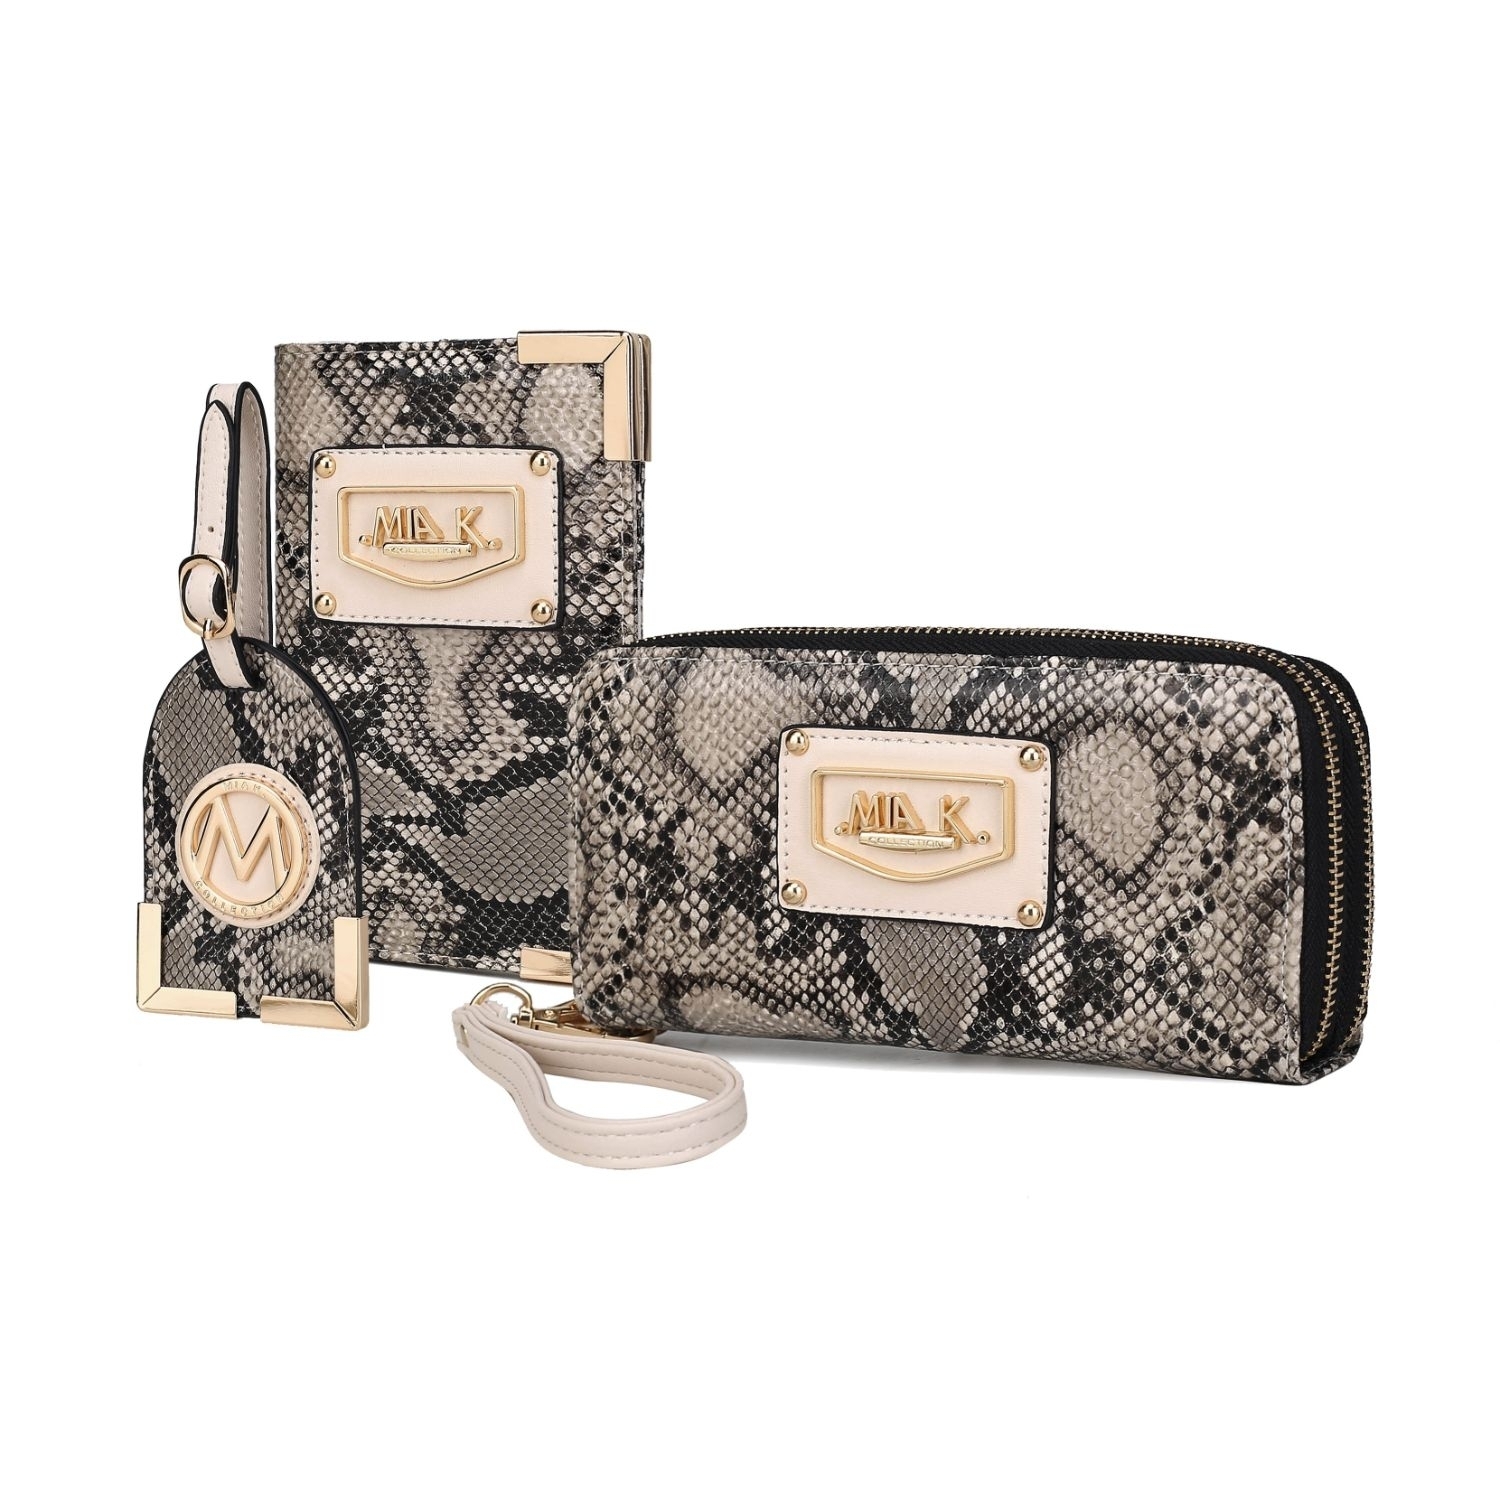 MKF Collection Darla Snake Travel Gift Set Handbag By Mia K 3 Pieces - Beige